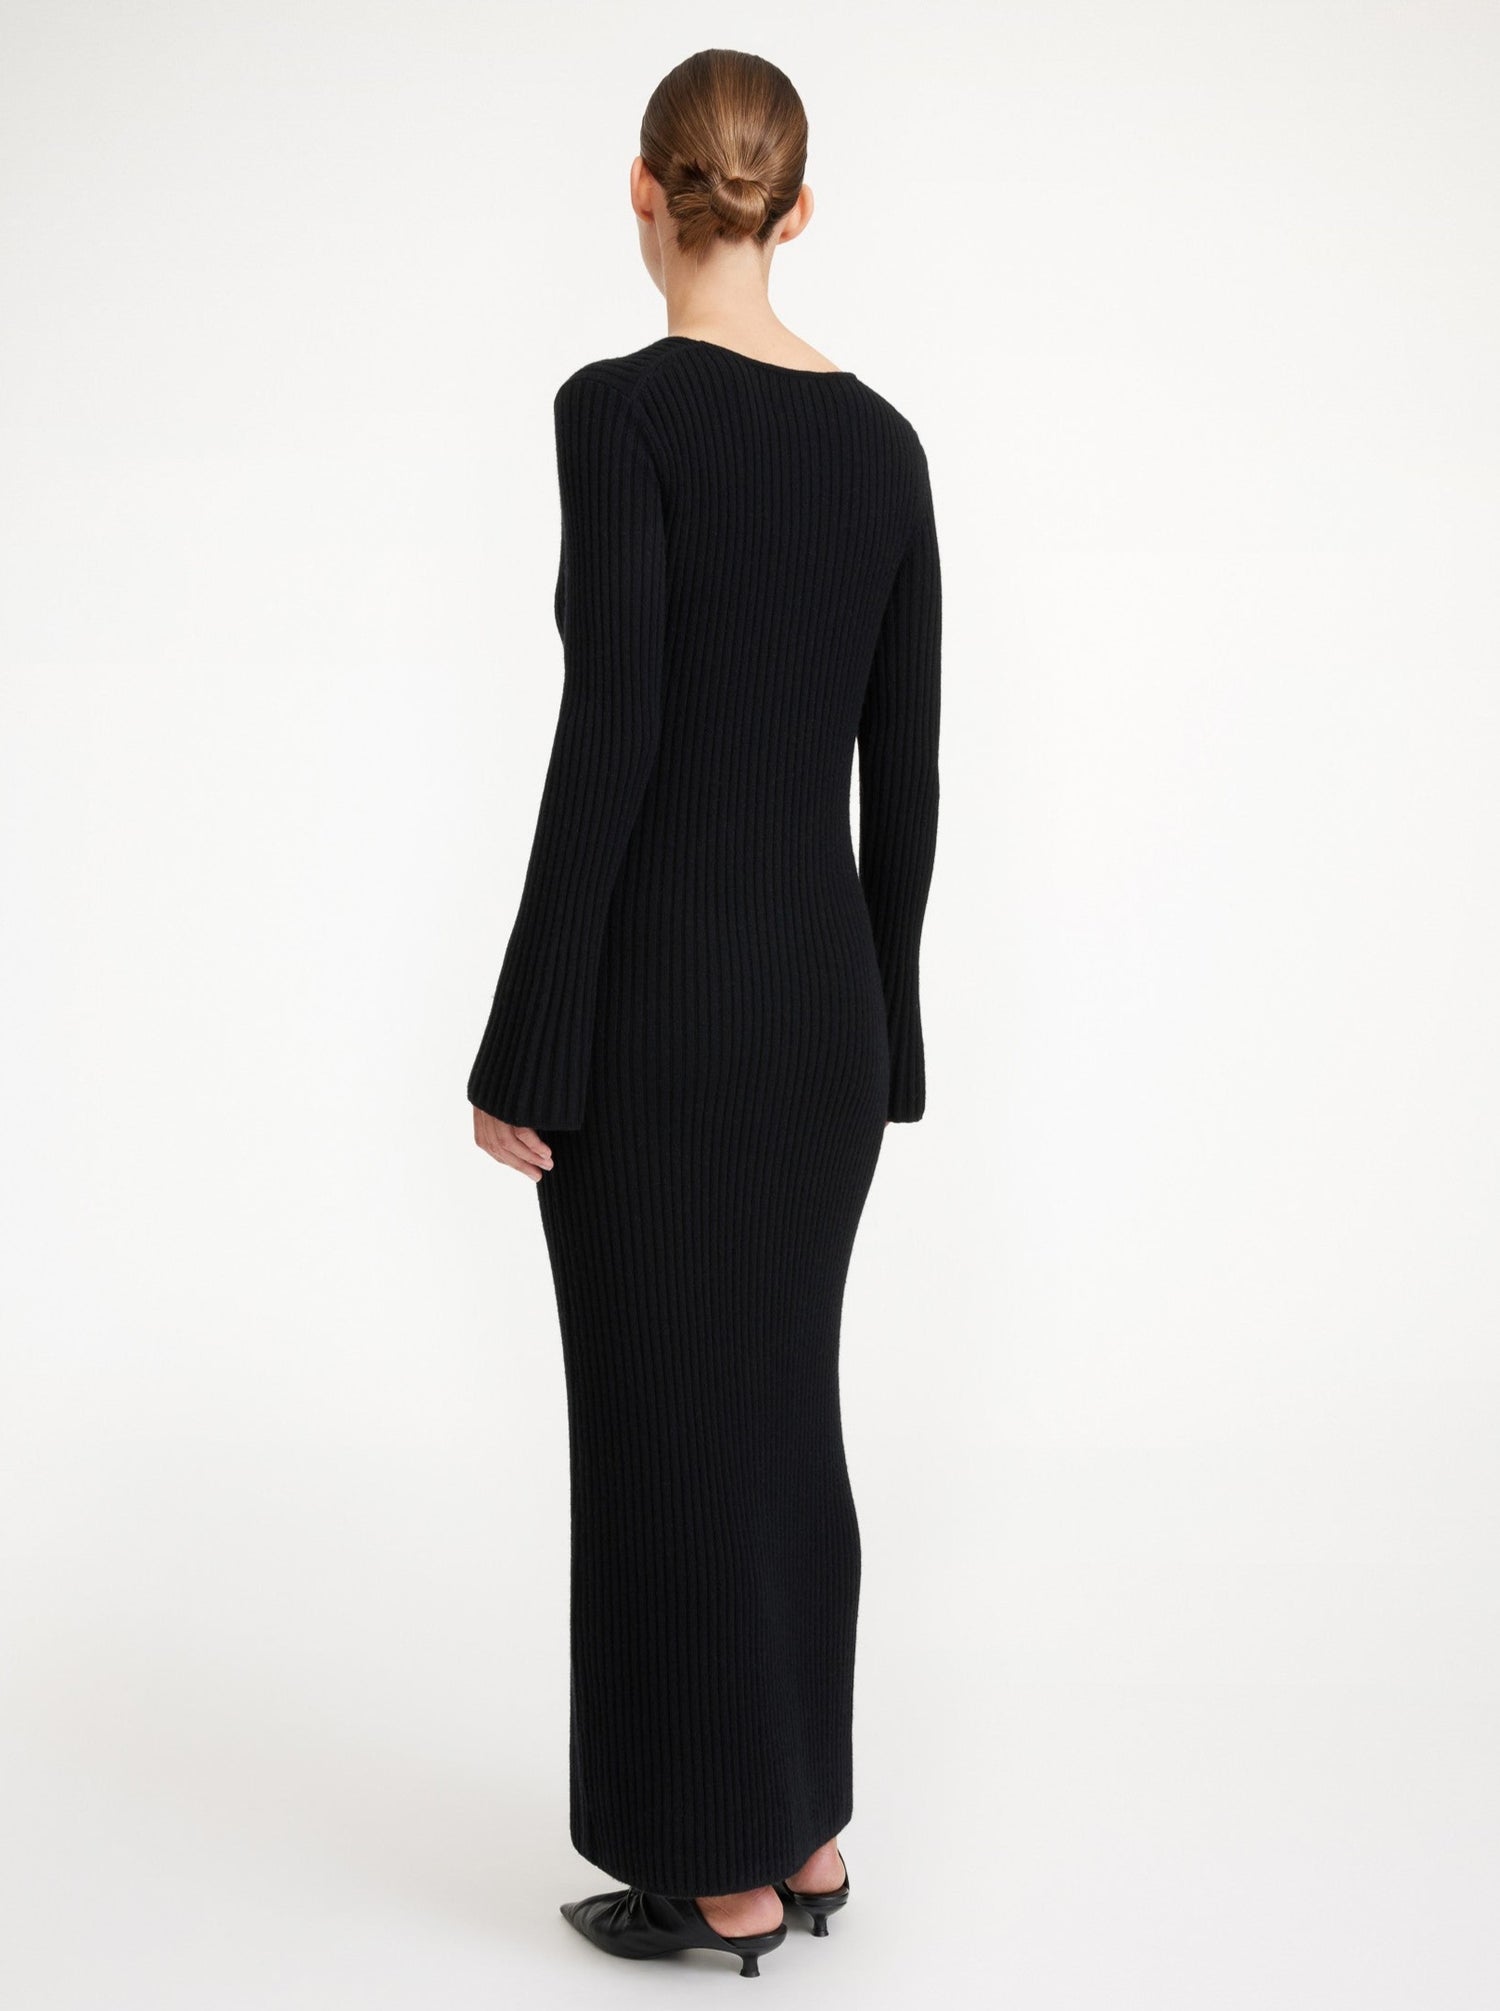 COLEA wool dress, black